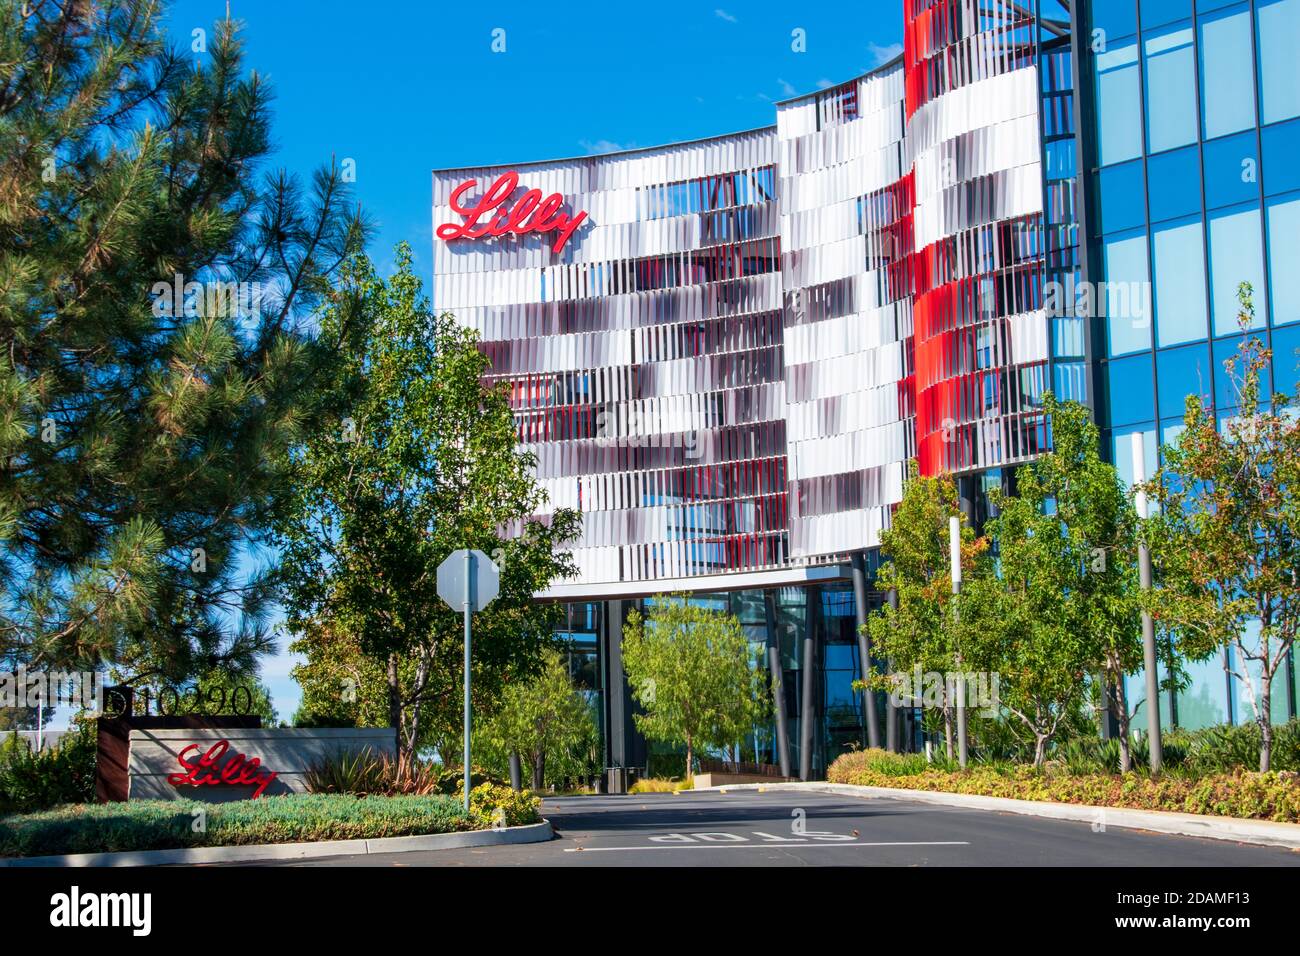 Lilly Biotechnology Center Campus eines amerikanischen Pharmaunternehmens Eli Lilly and Company - San Diego, California, USA - 2020 Stockfoto